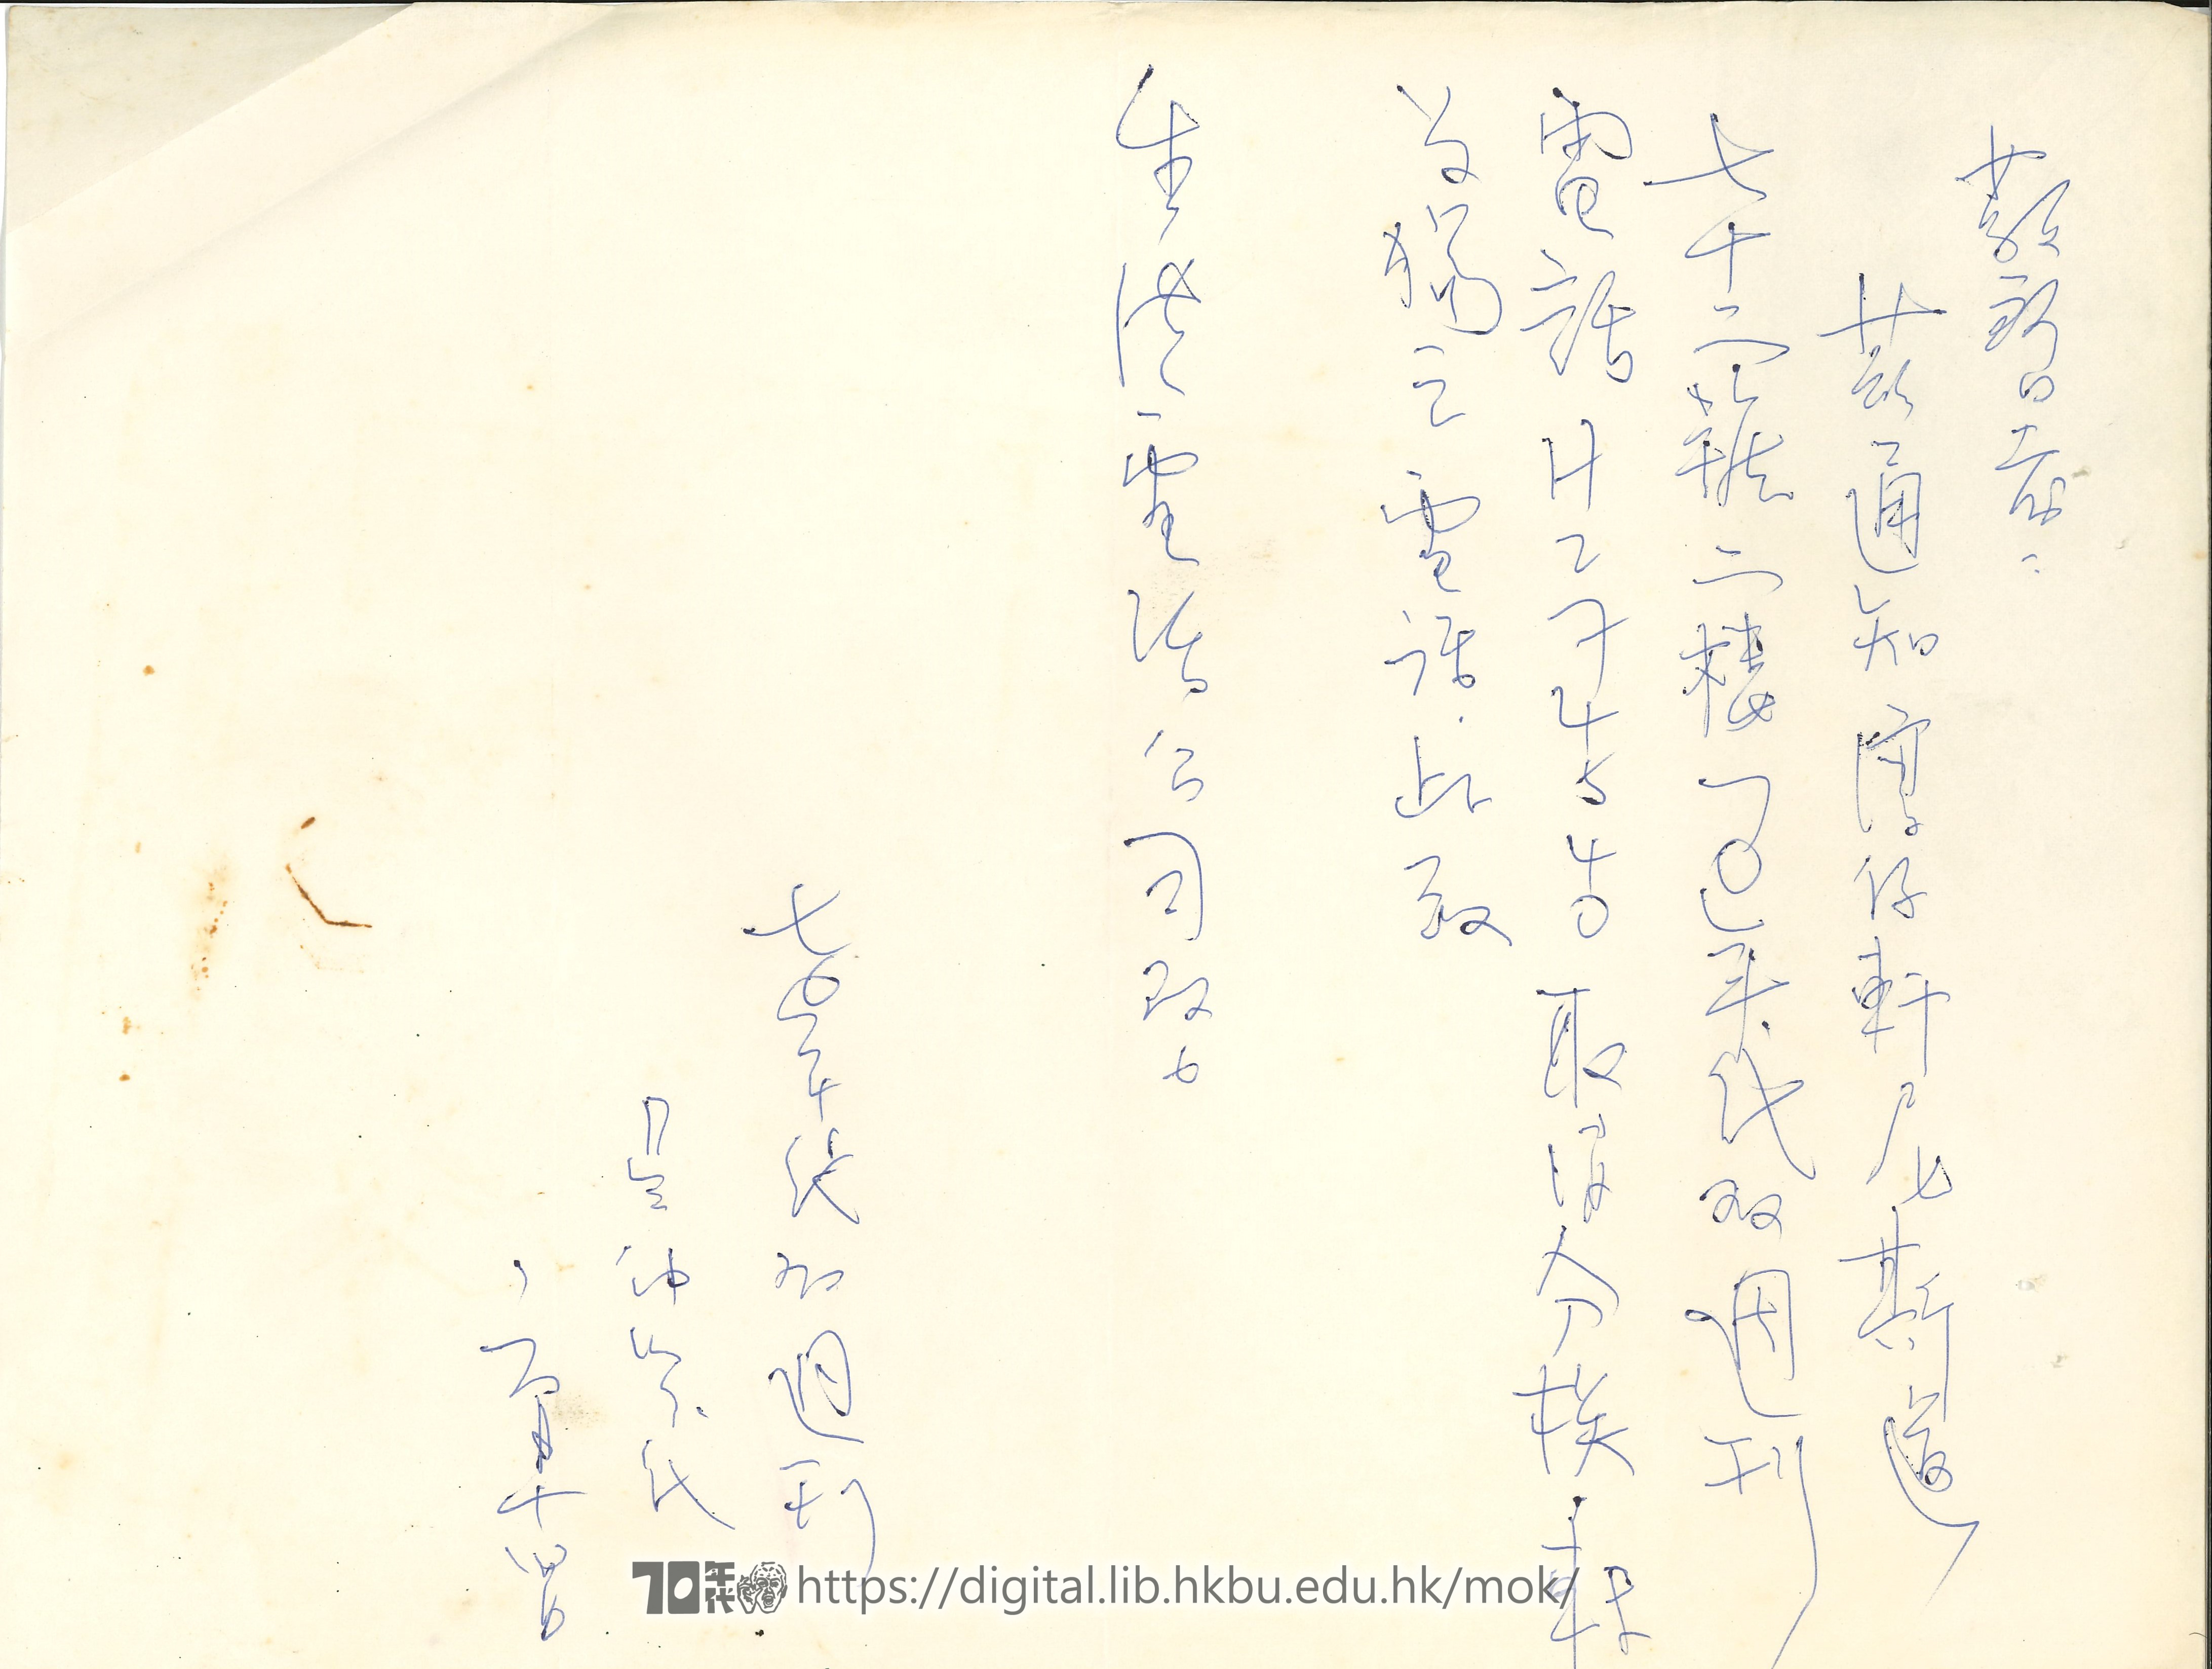   Letter from Ng Chung Yin to Hong Kong Telephone Company  